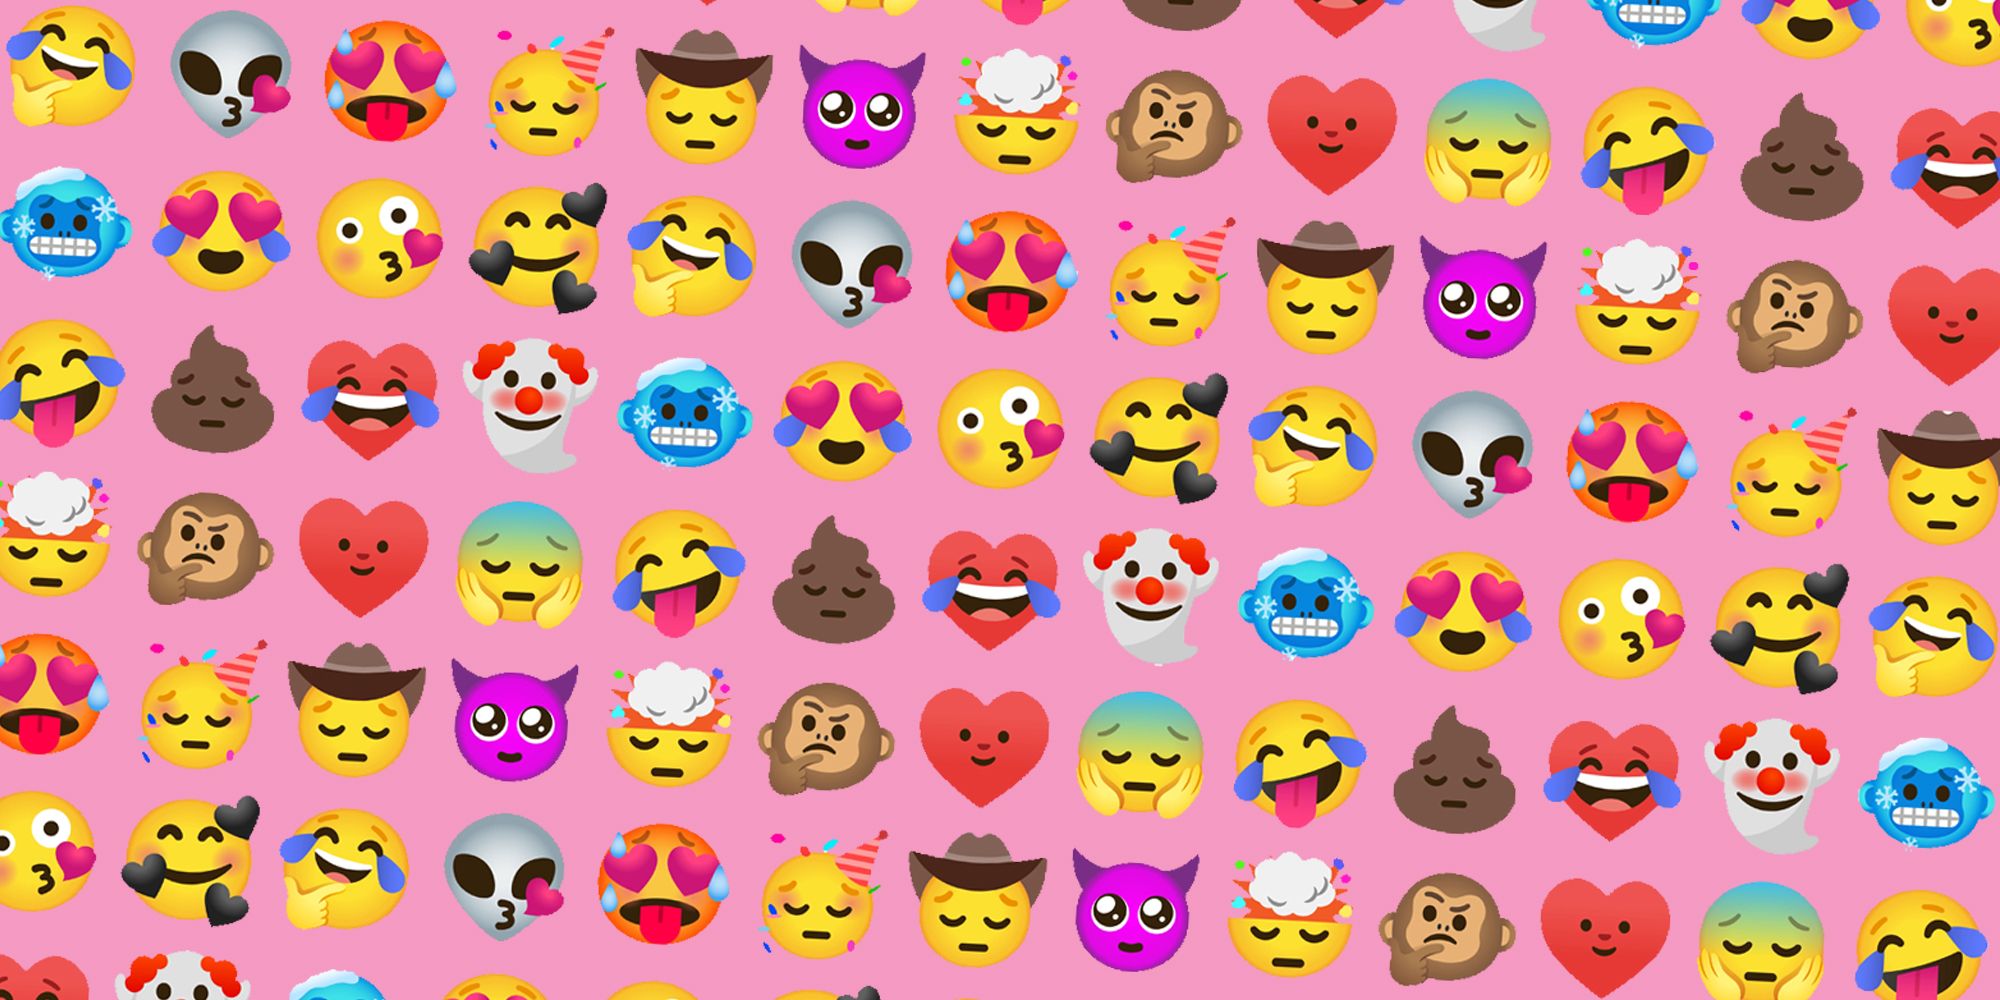 Hands On With Google's New Emoji Mashups